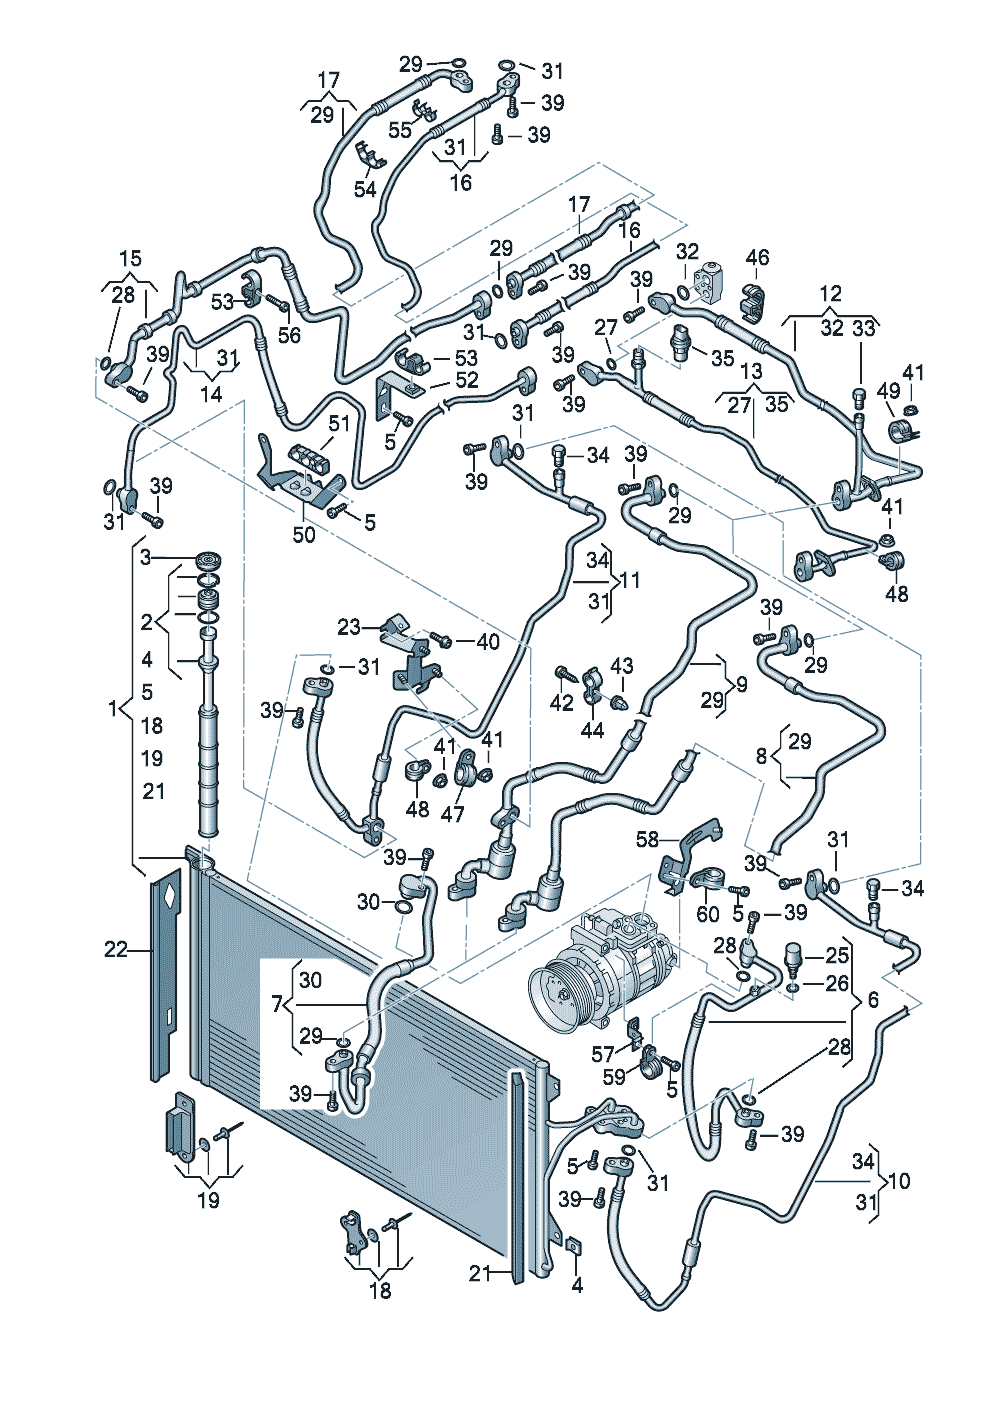 circuit de refrigerantCondenseur de climatiseur avec<br>reservoir de refrigerant  - Audi Q7 - aq7